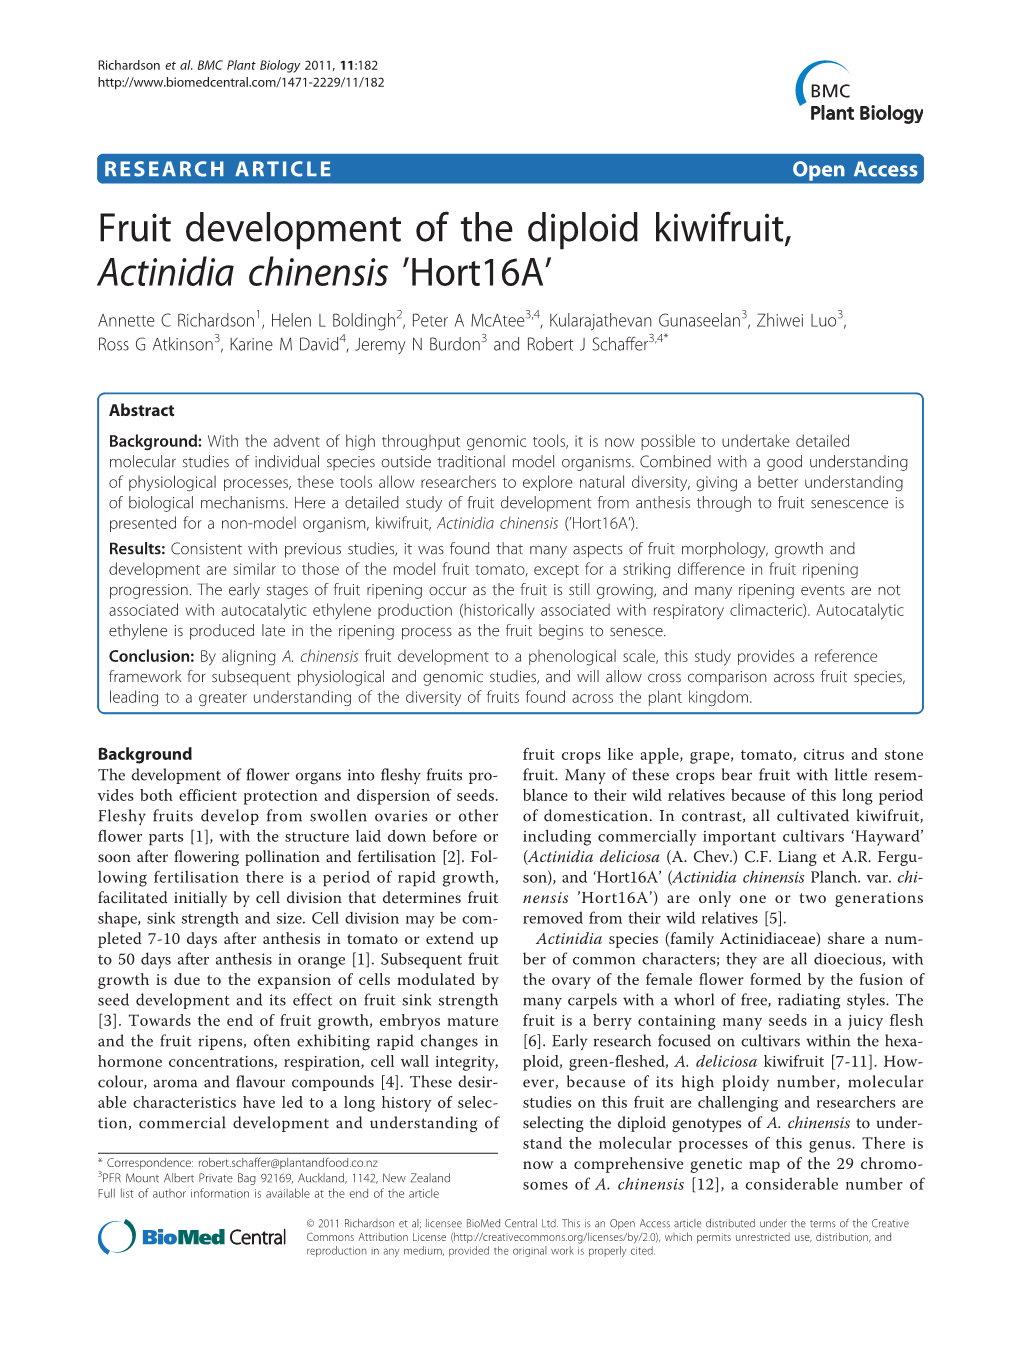 Fruit Development of the Diploid Kiwifruit, Actinidia Chinensis